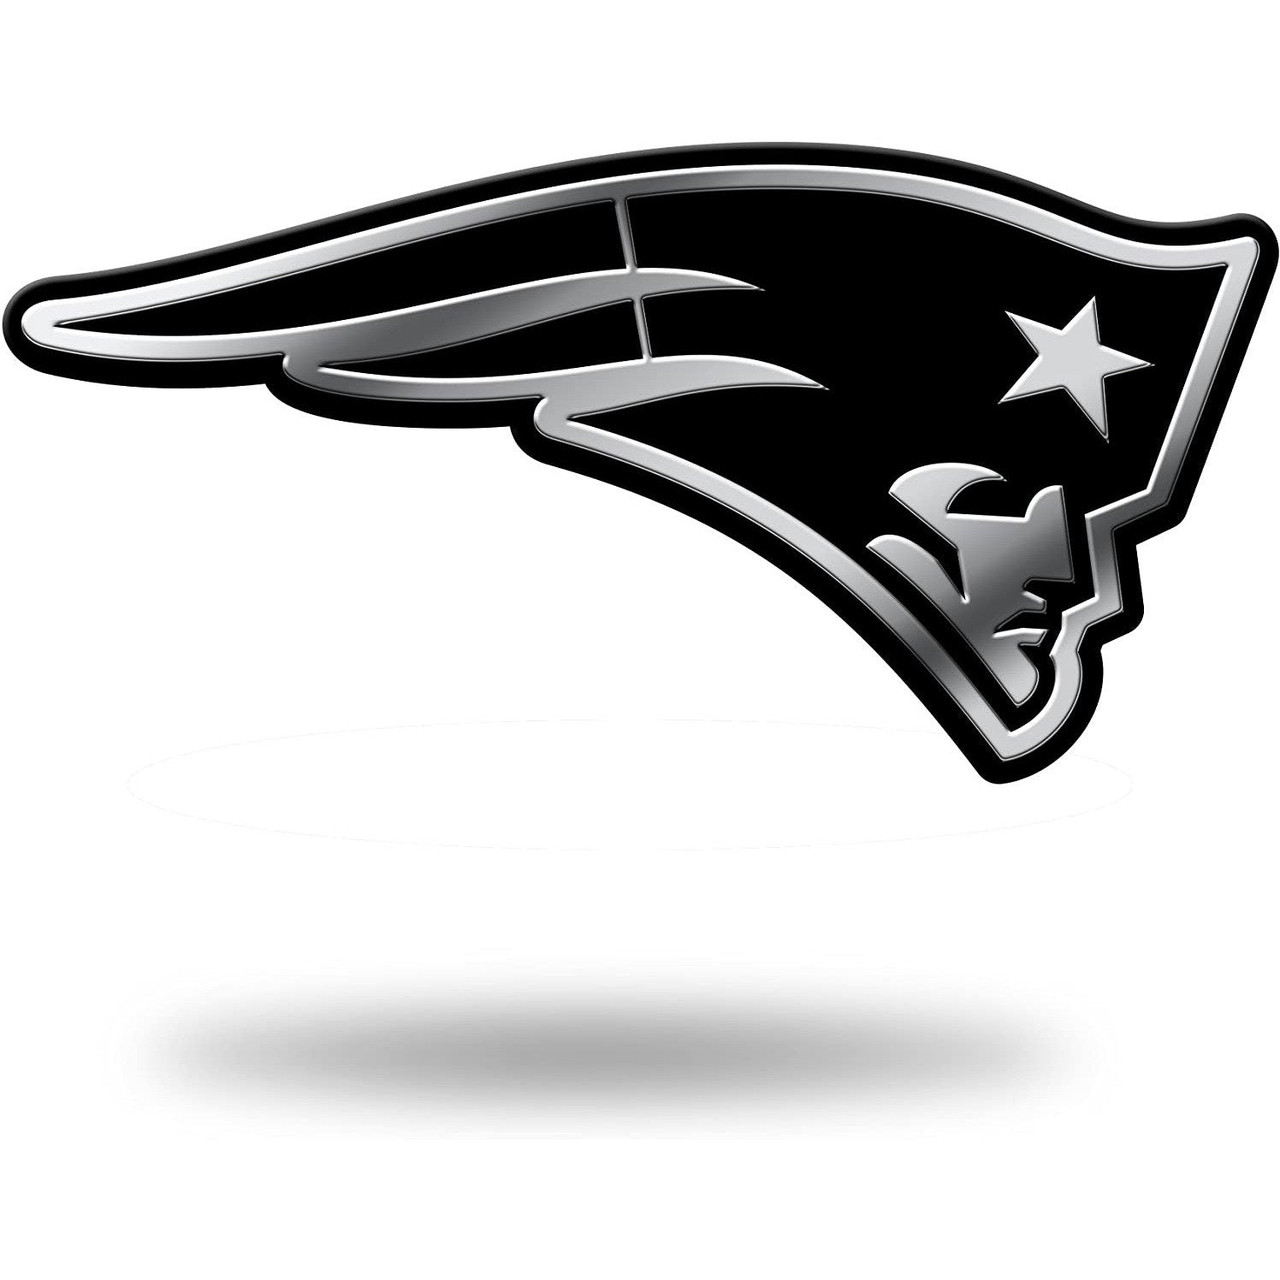 patriots black and white logo